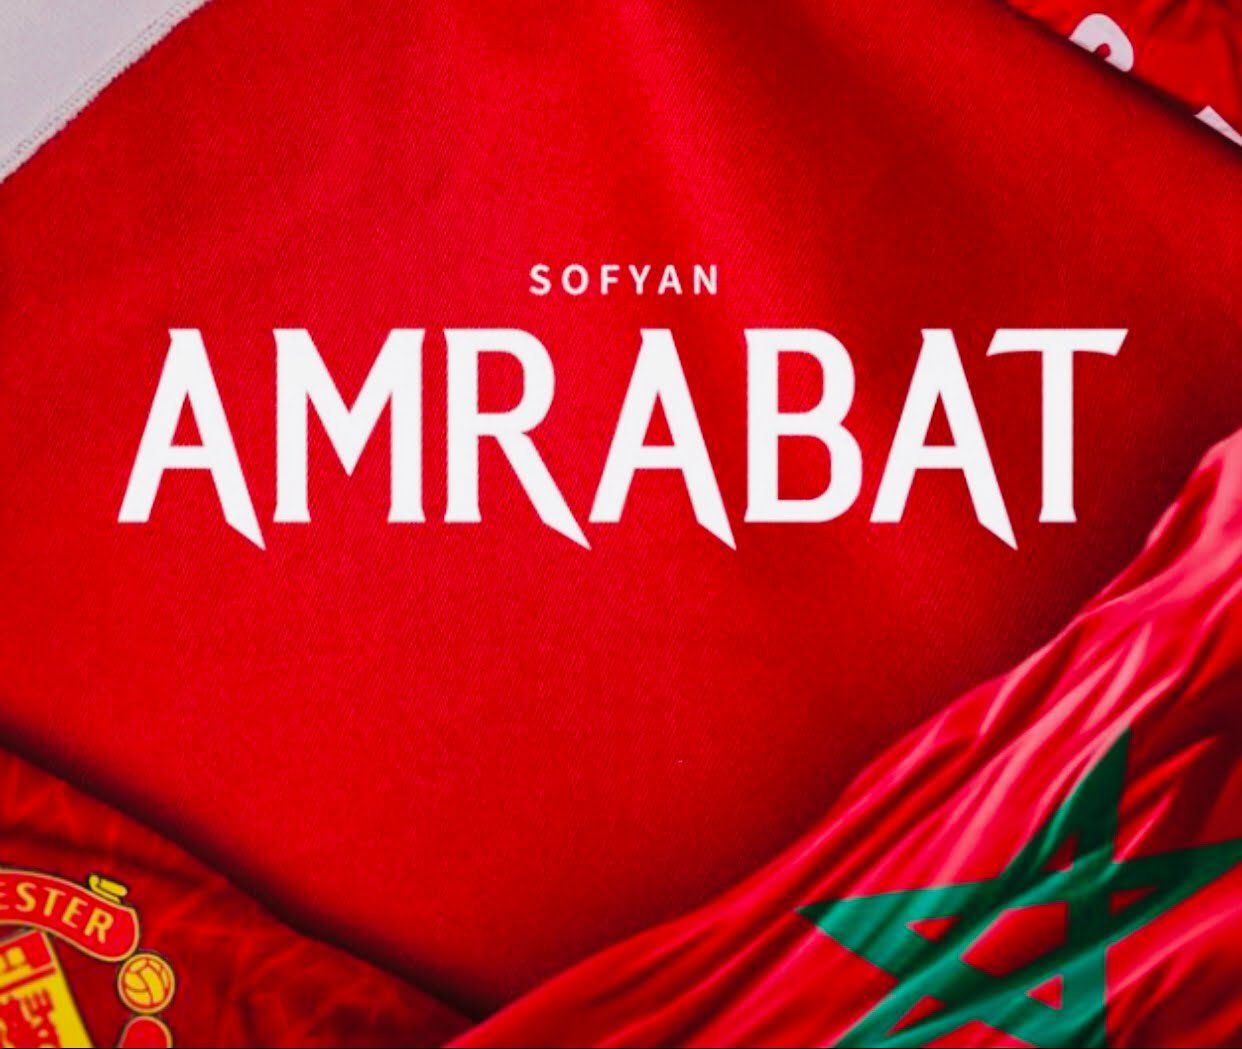 OFFICIAL Sofyan Amrabat joins Manchester United on loan